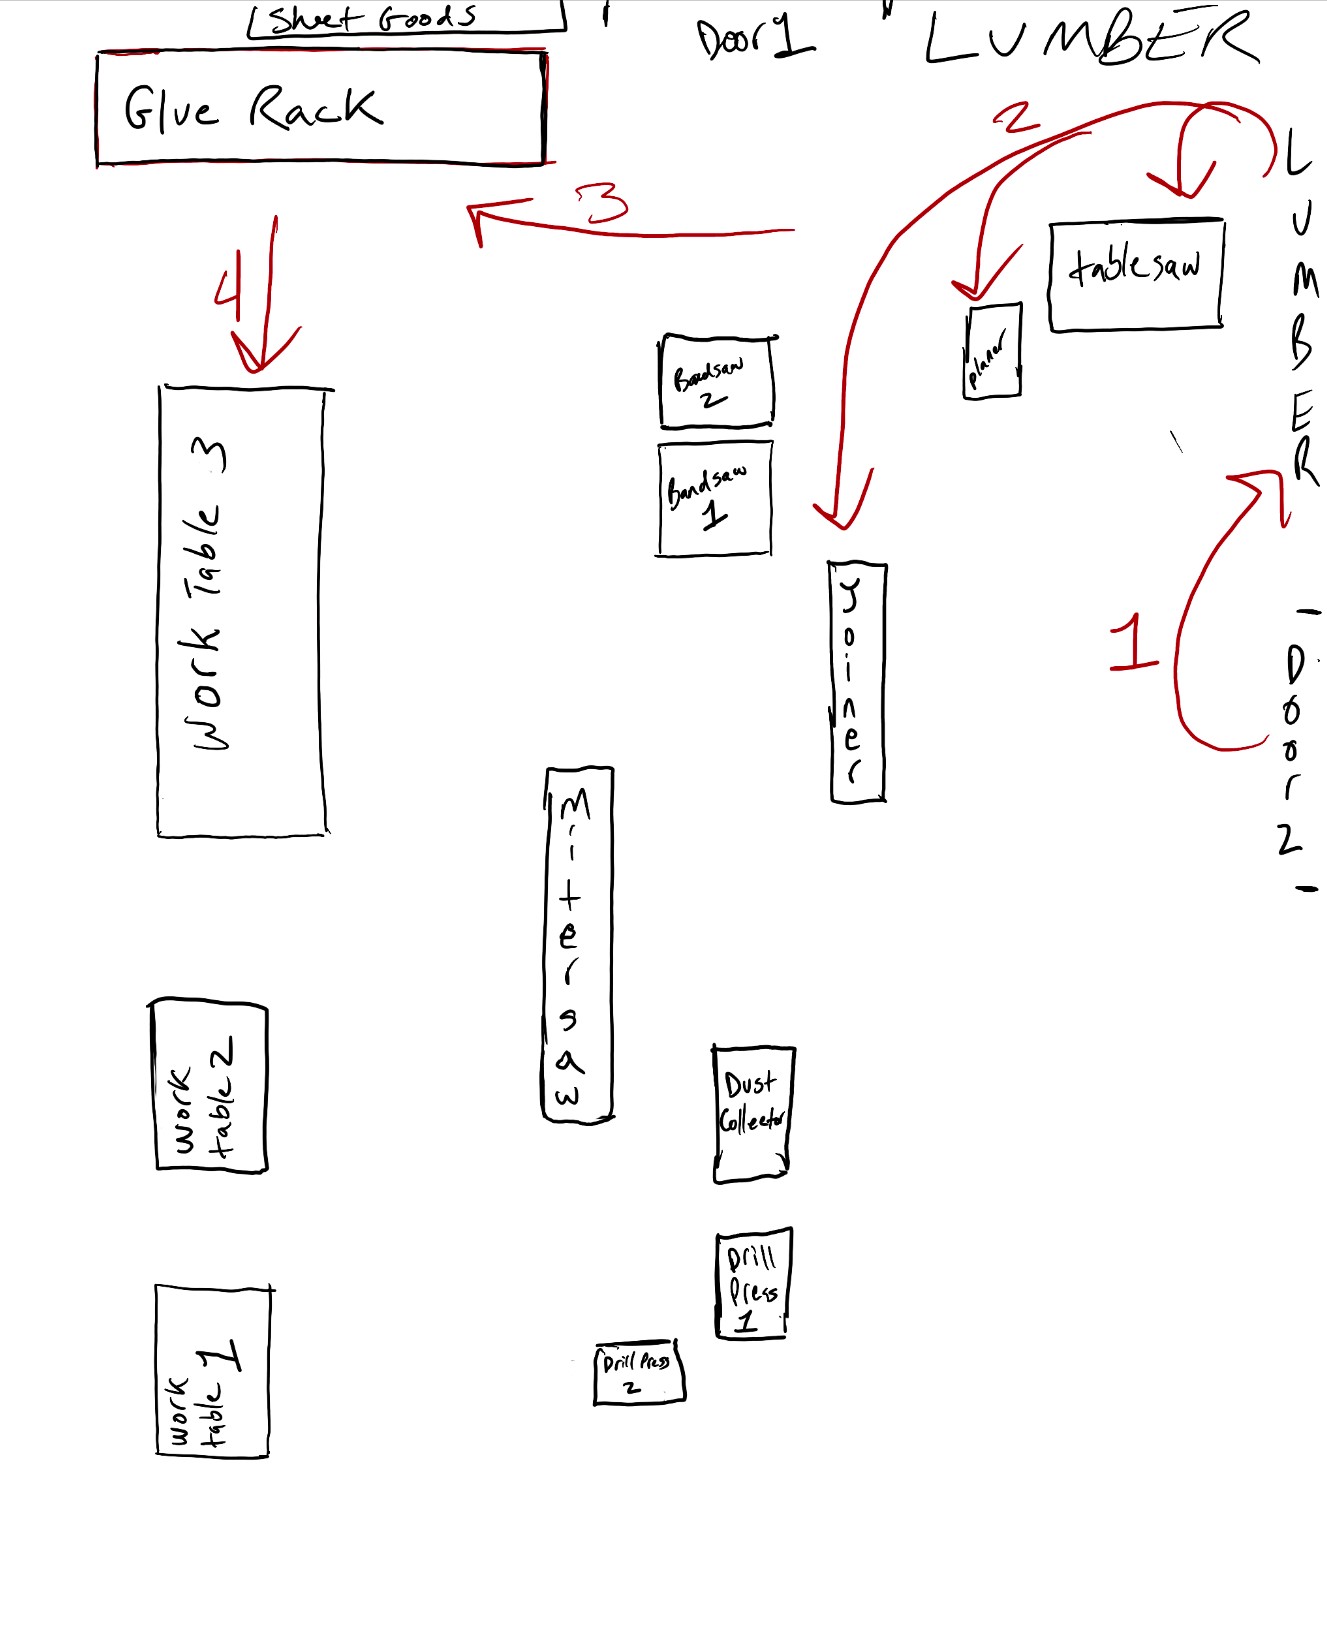 Matt Buell shop layout with workflow